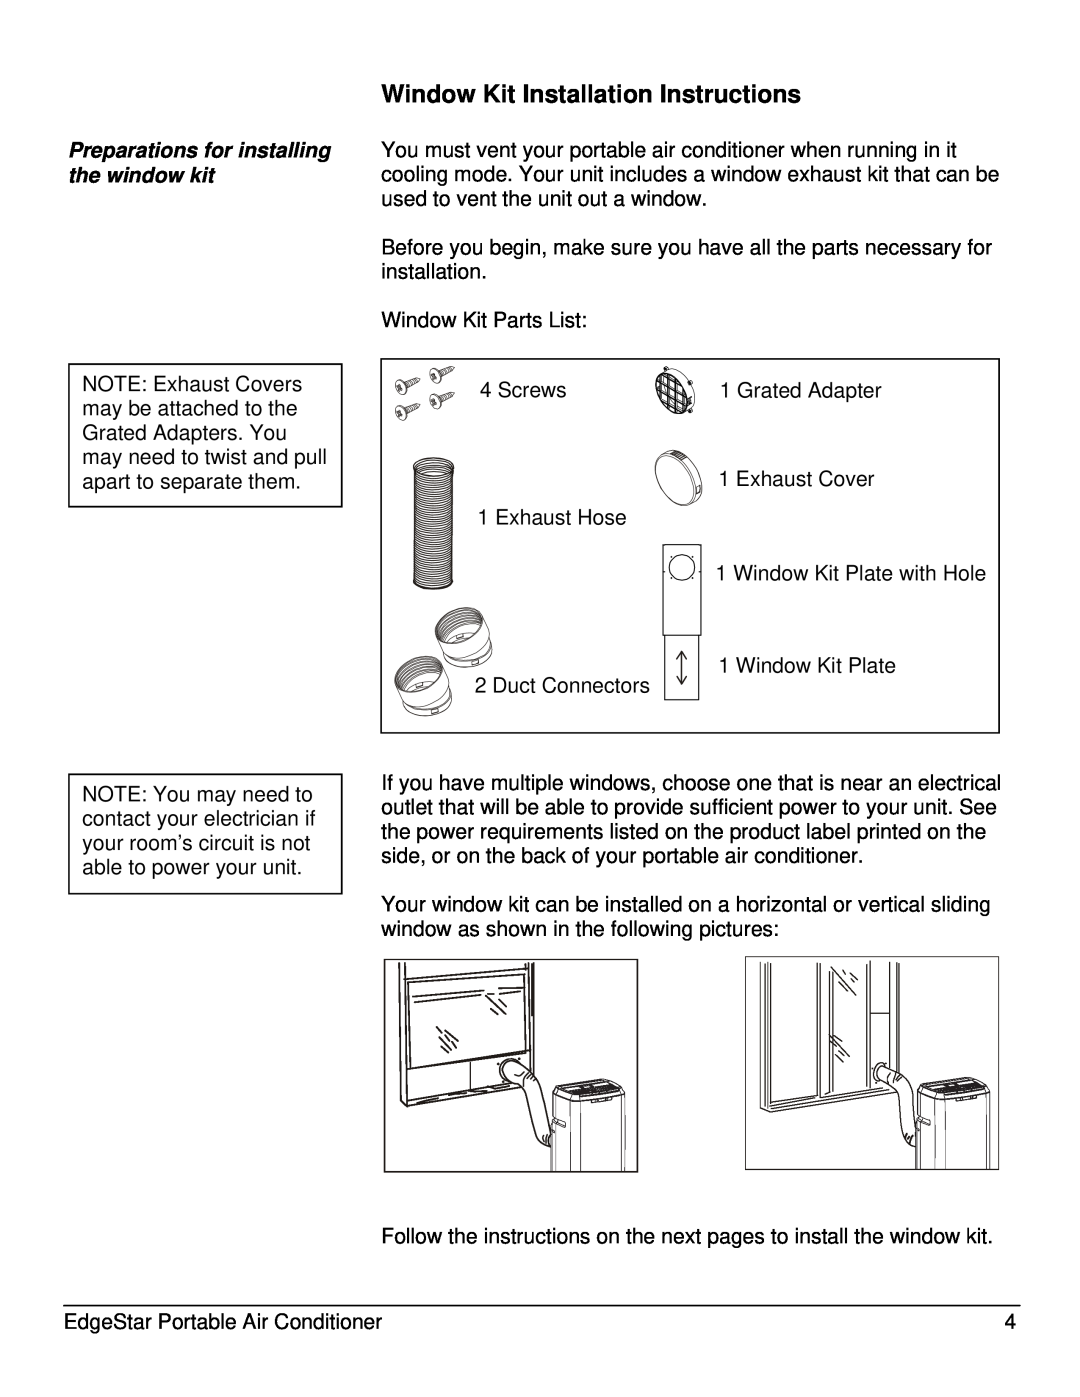 EdgeStar AP12005ECO owner manual Window Kit Installation Instructions, Preparations for installing the window kit 